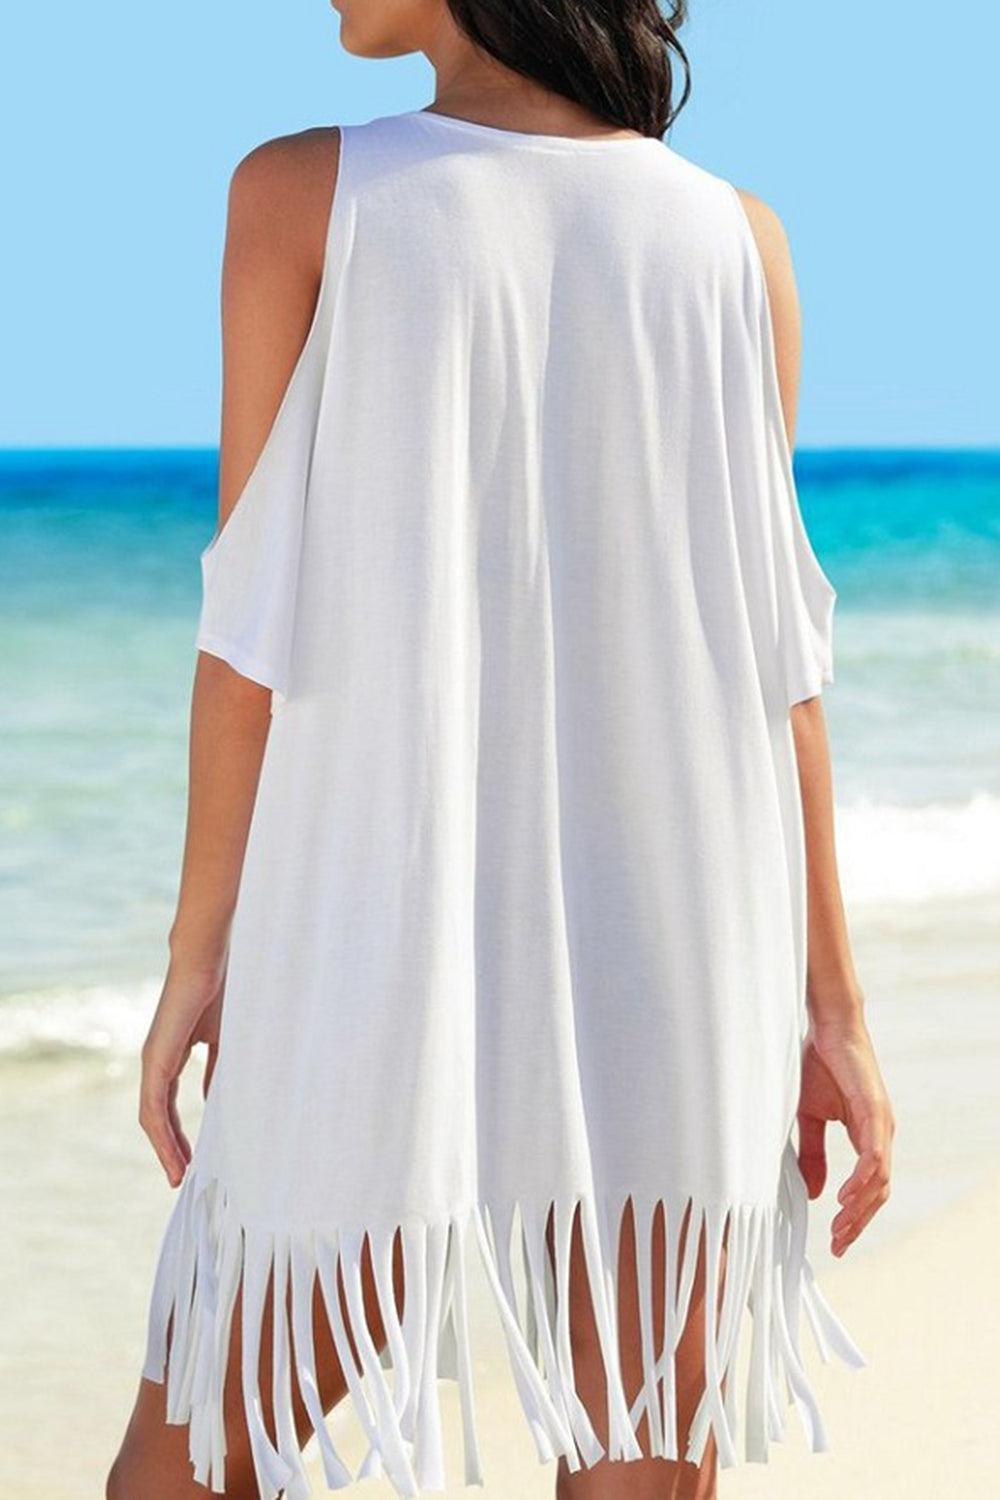 a woman standing on a beach wearing a white dress